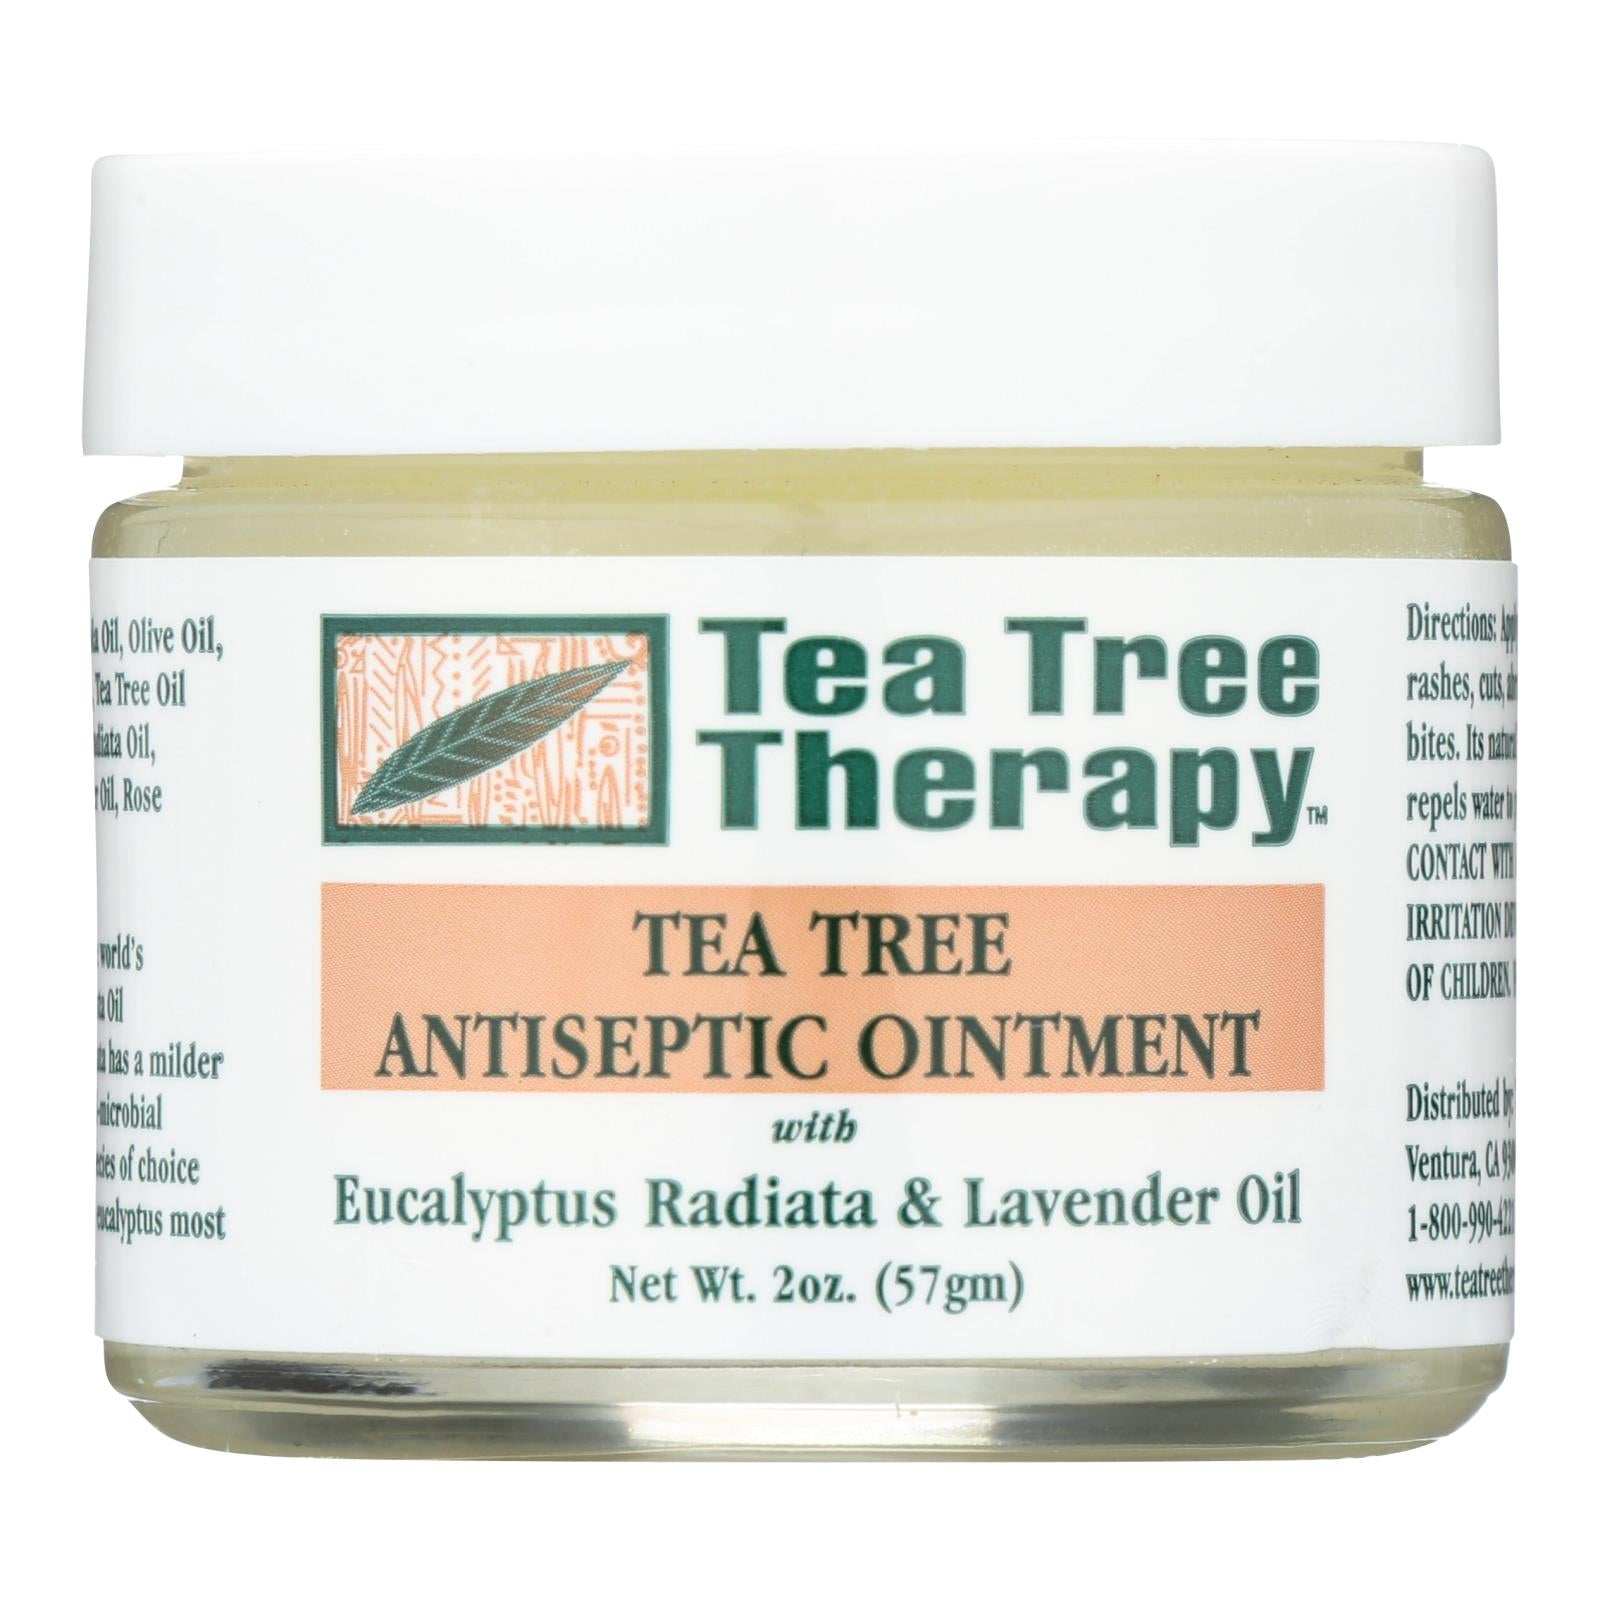 Tea Tree Therapy Antiseptic Ointment Eucalyptus Australiana And Lavender Oil - 2 Oz